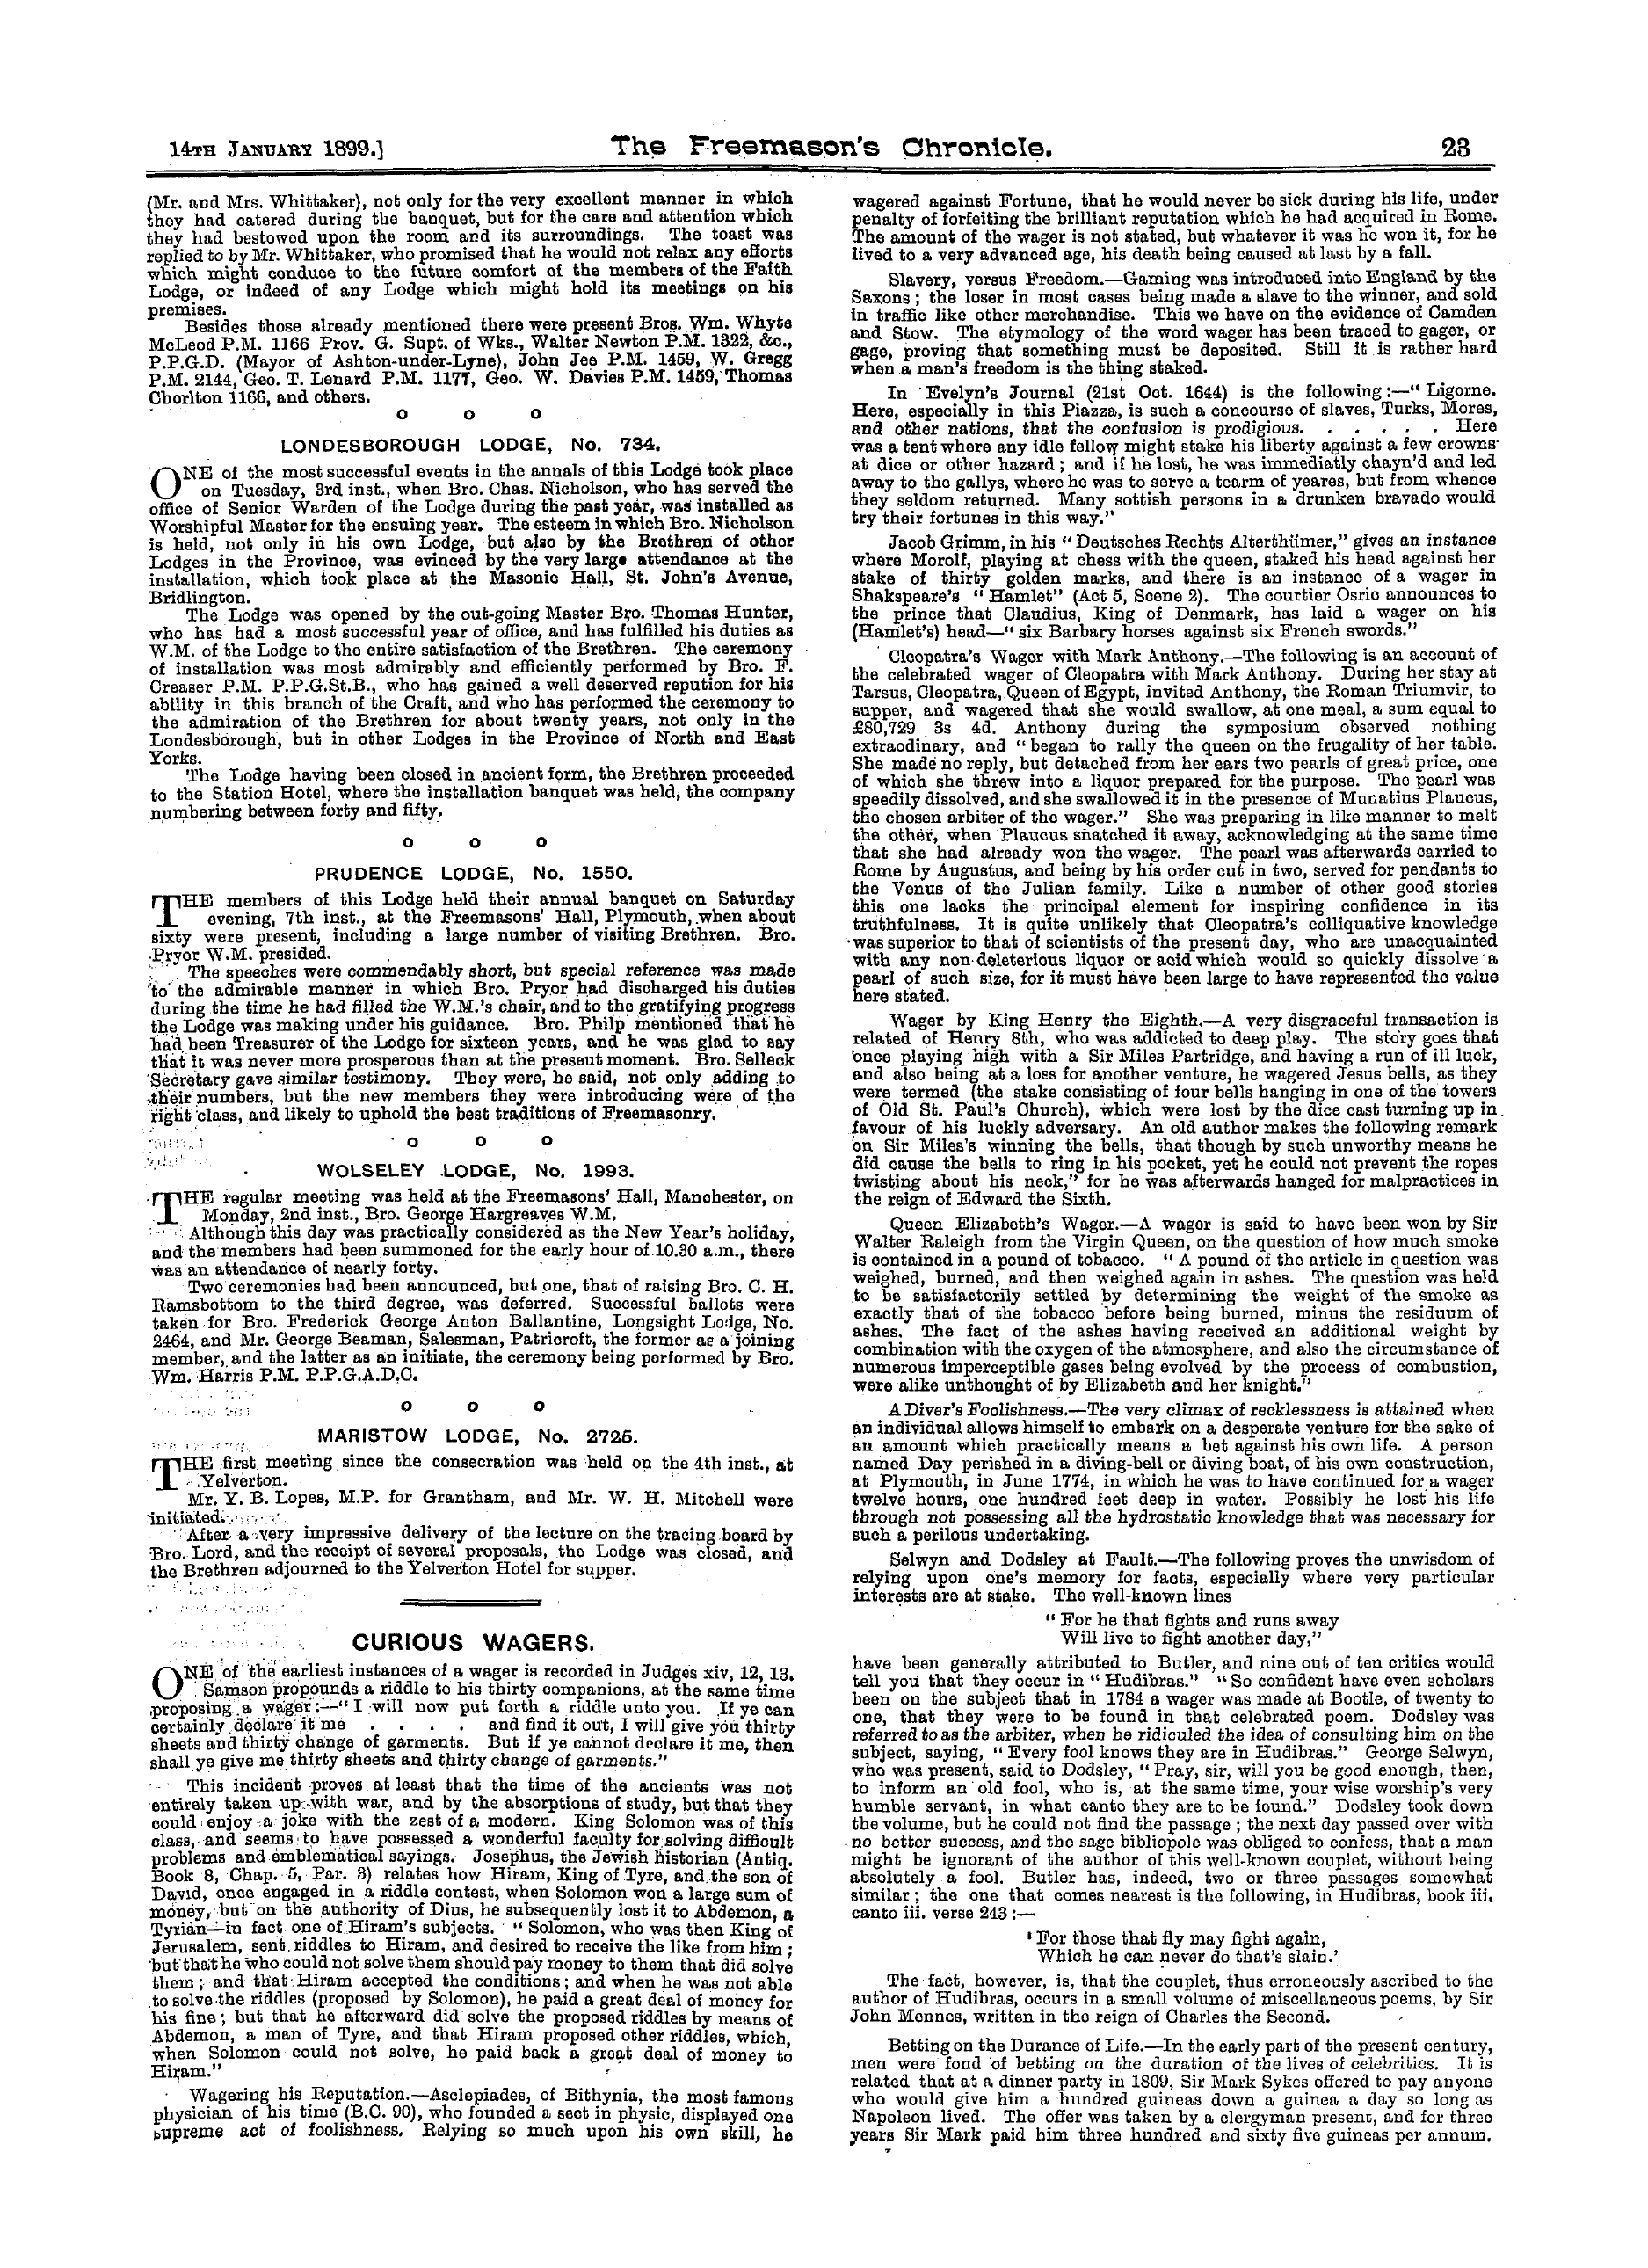 The Freemason's Chronicle: 1899-01-14: 11